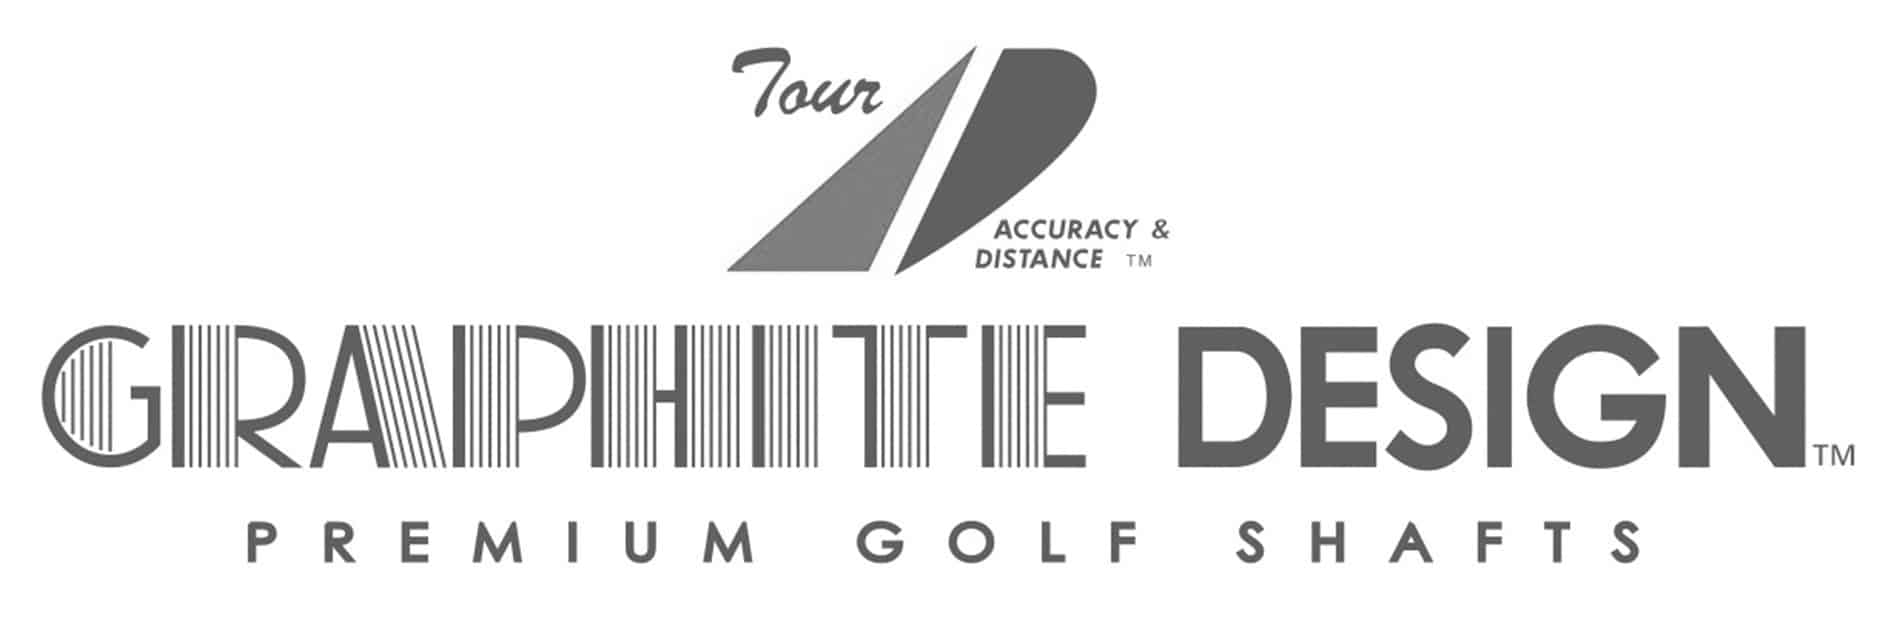 logo brand graphite design - Club Fittings - Sticks 96 Golf